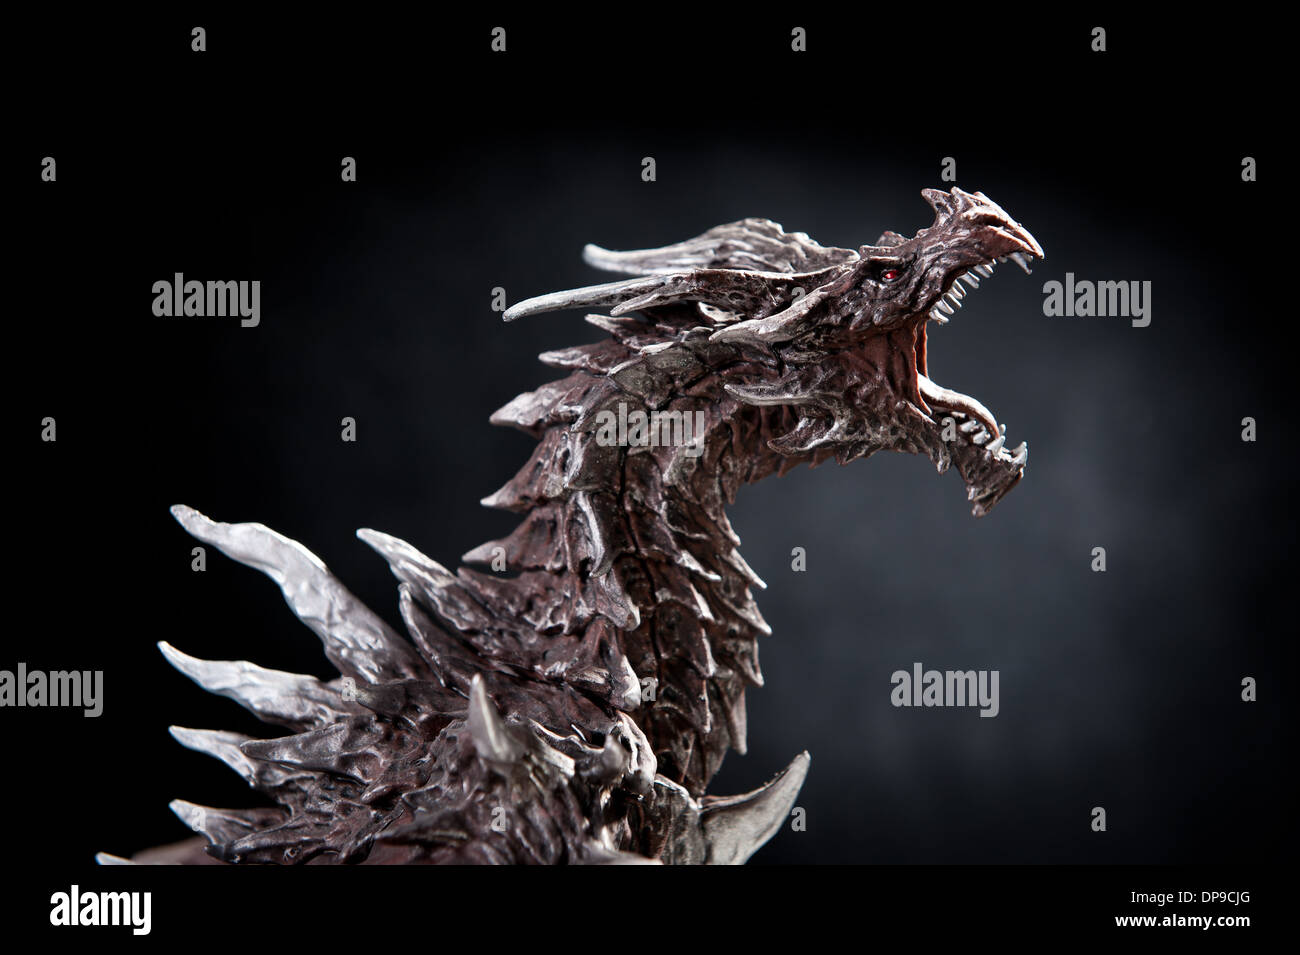 Alduin dragon portrait from Skyrim game Stock Photo